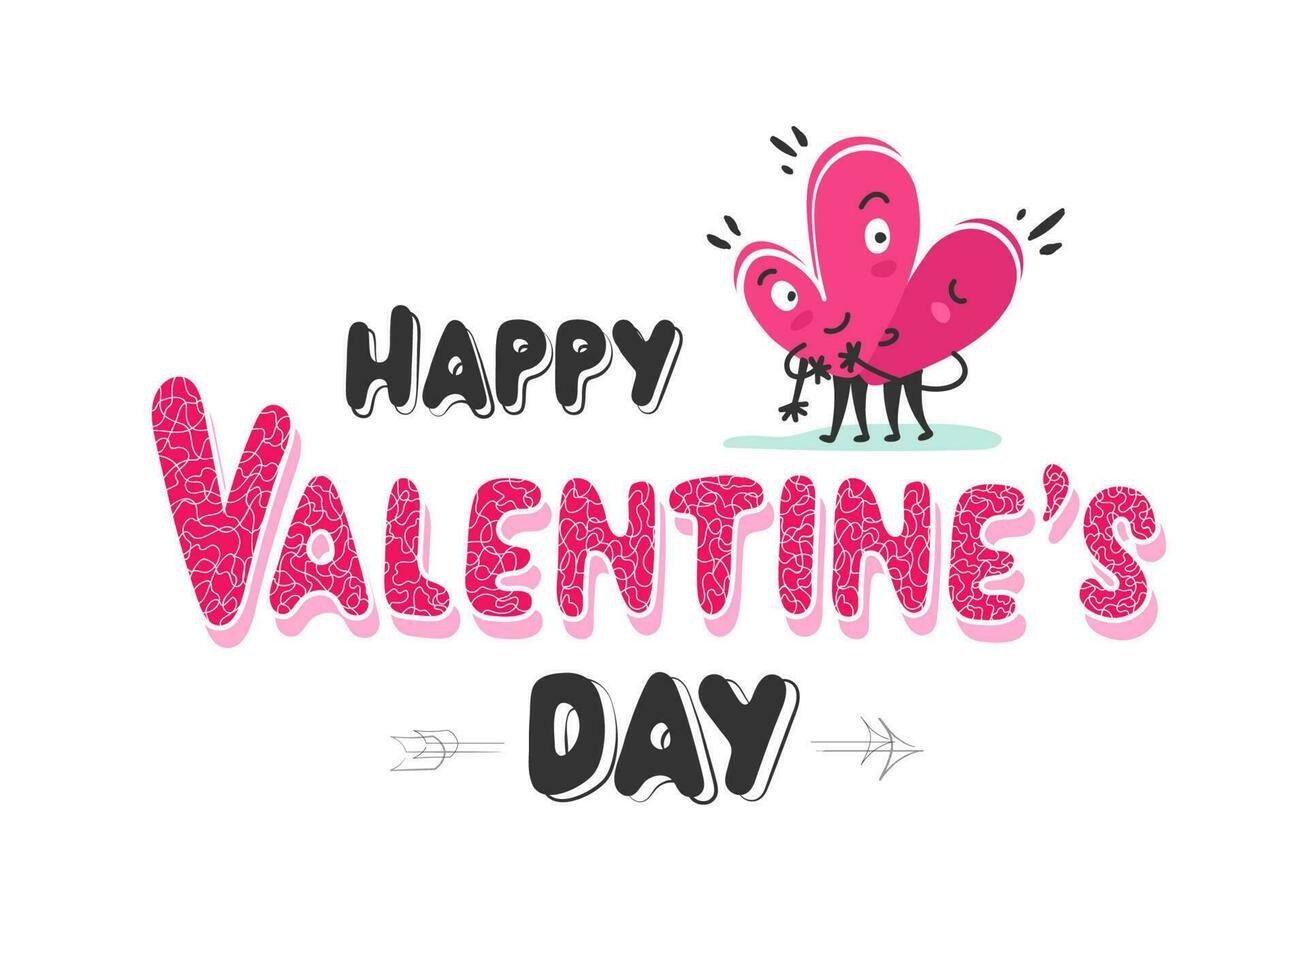 contento San Valentín día texto con dibujos animados corazones Pareja abrazando en blanco antecedentes. vector